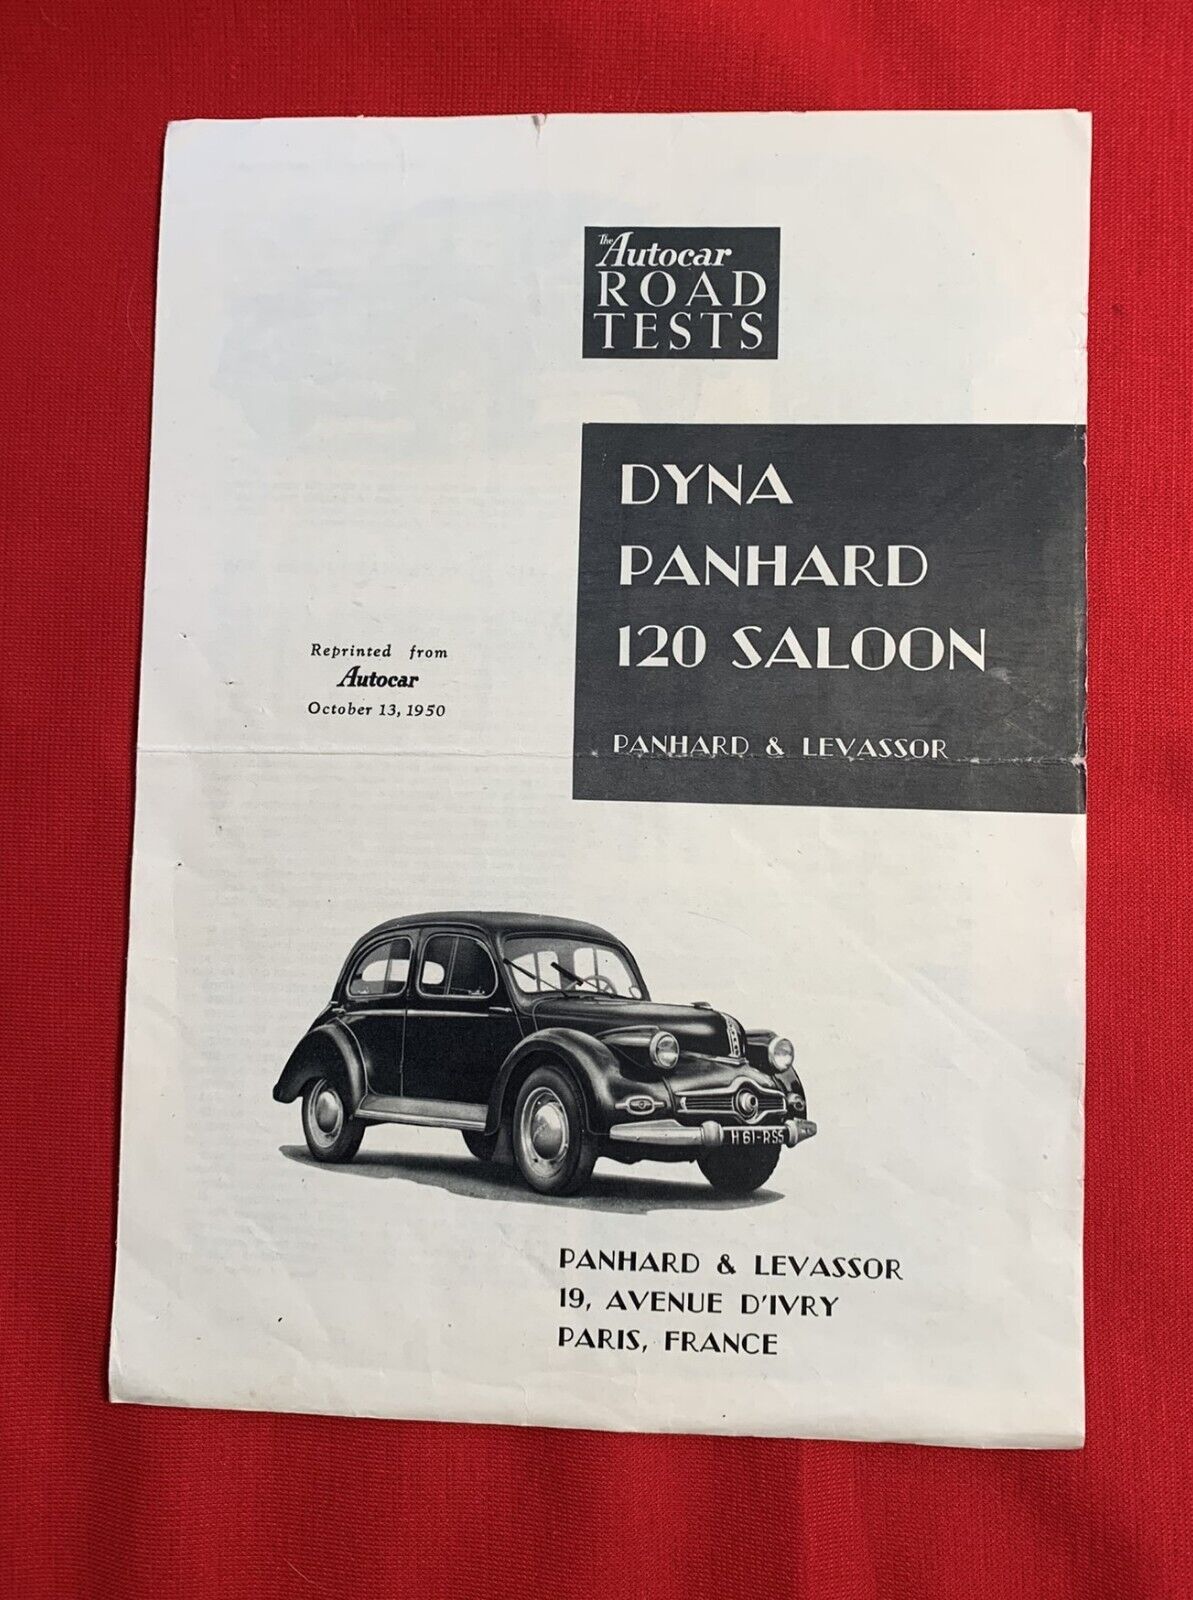 1950 DYNA PANHARD  120 SALOON AUTOCAR ROAD TEST REPRINT BROCHURE Rare 4 Page